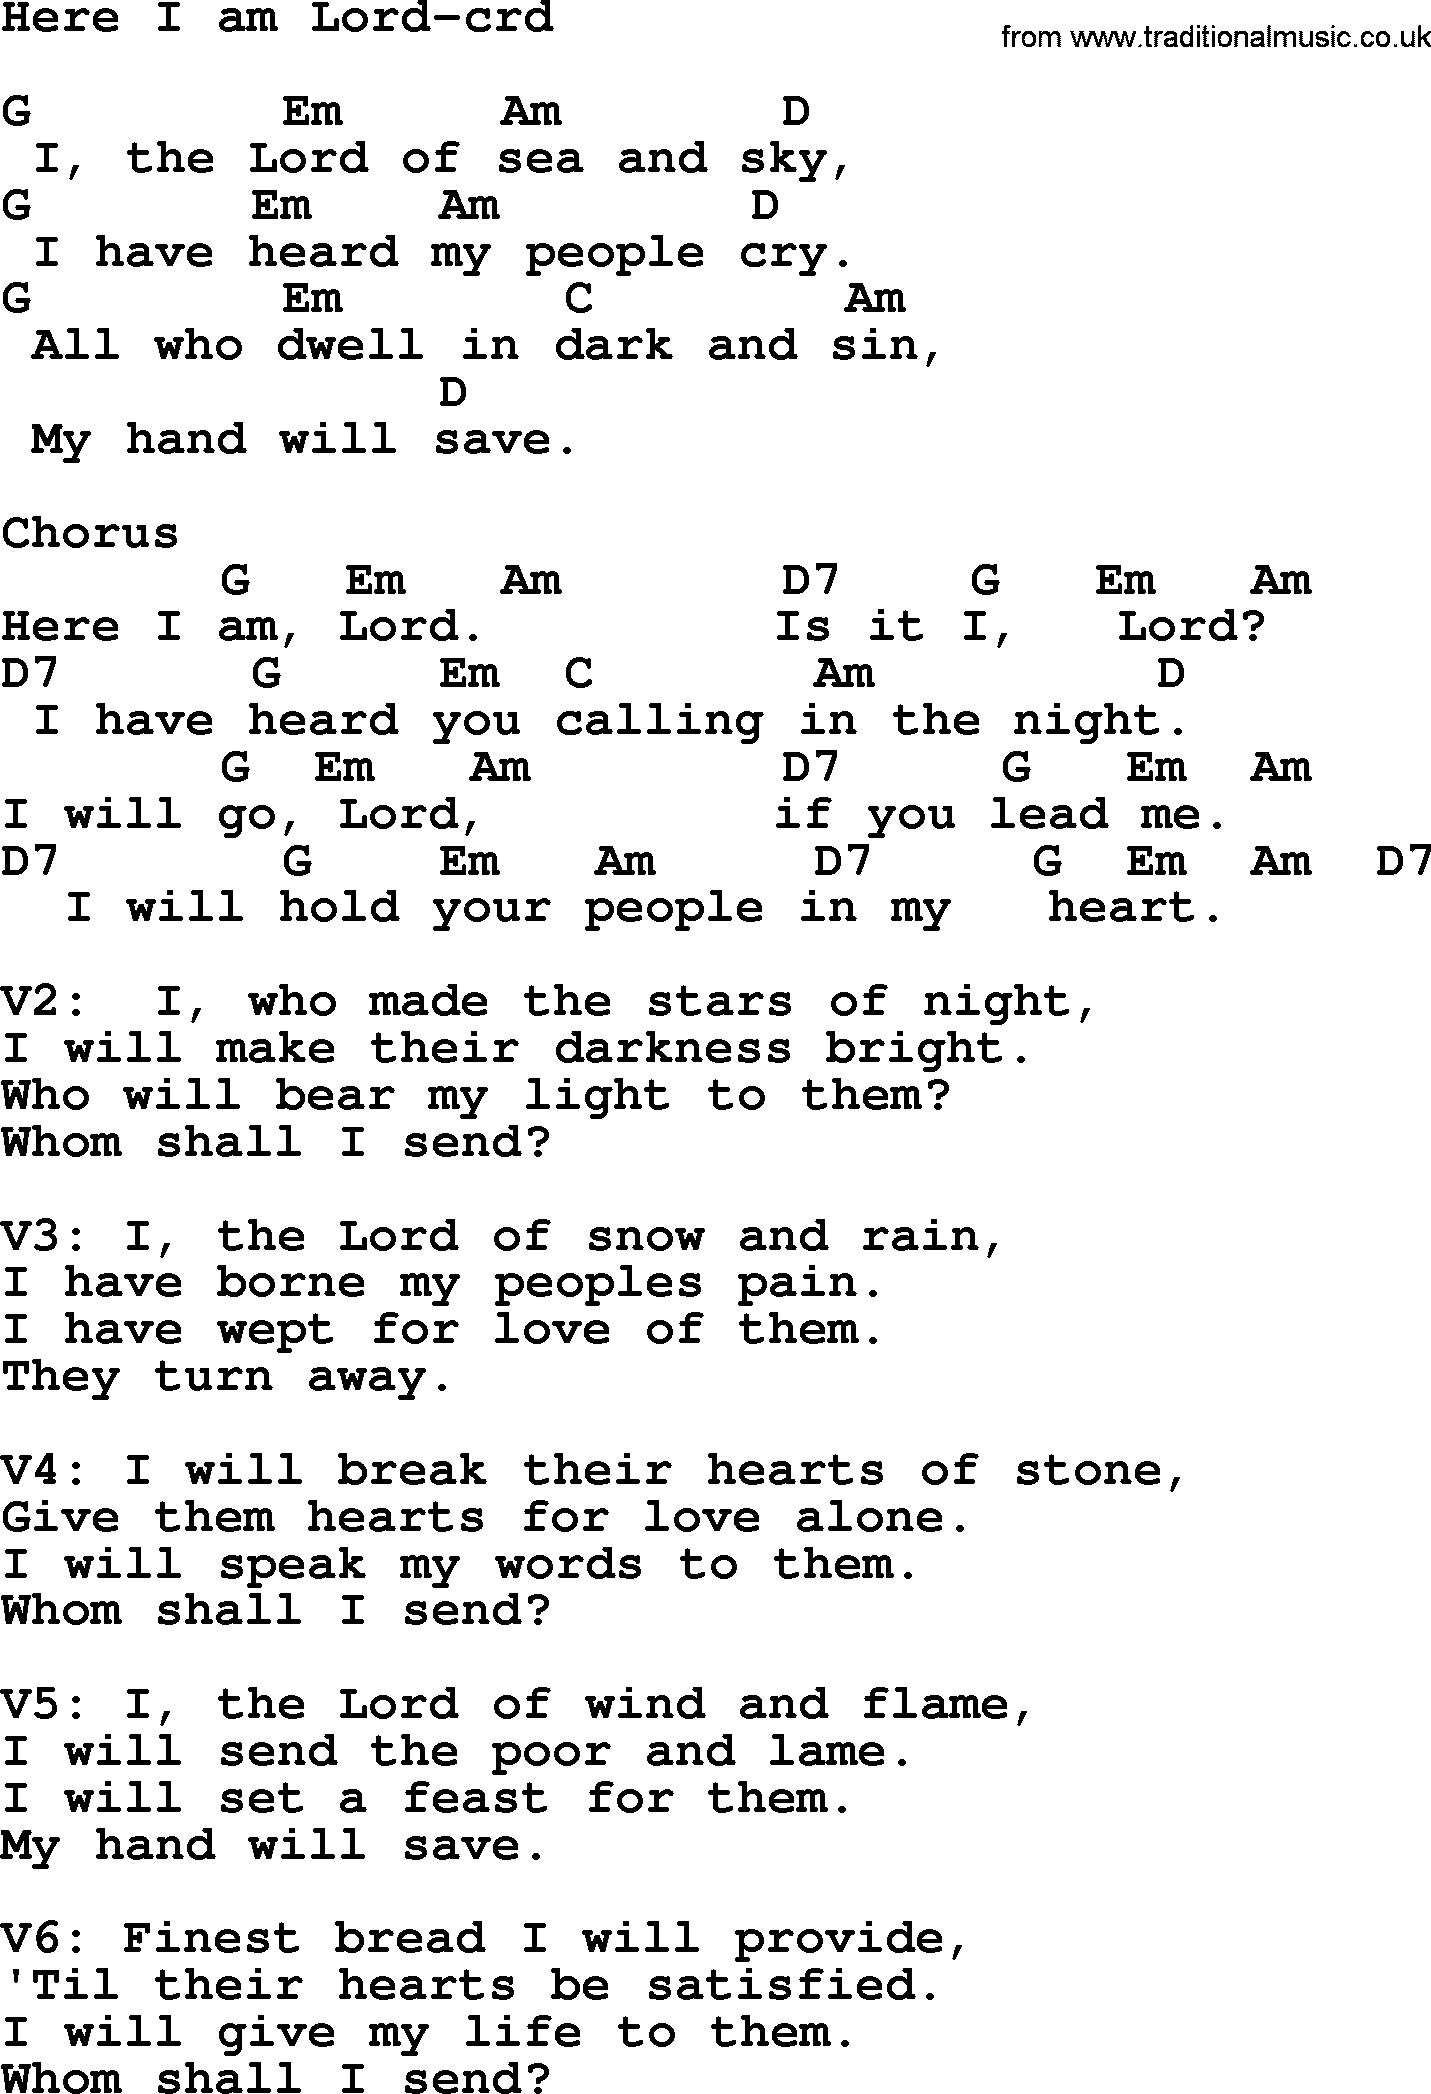 Top 500 Hymn: Here I Am Lord, lyrics and chords